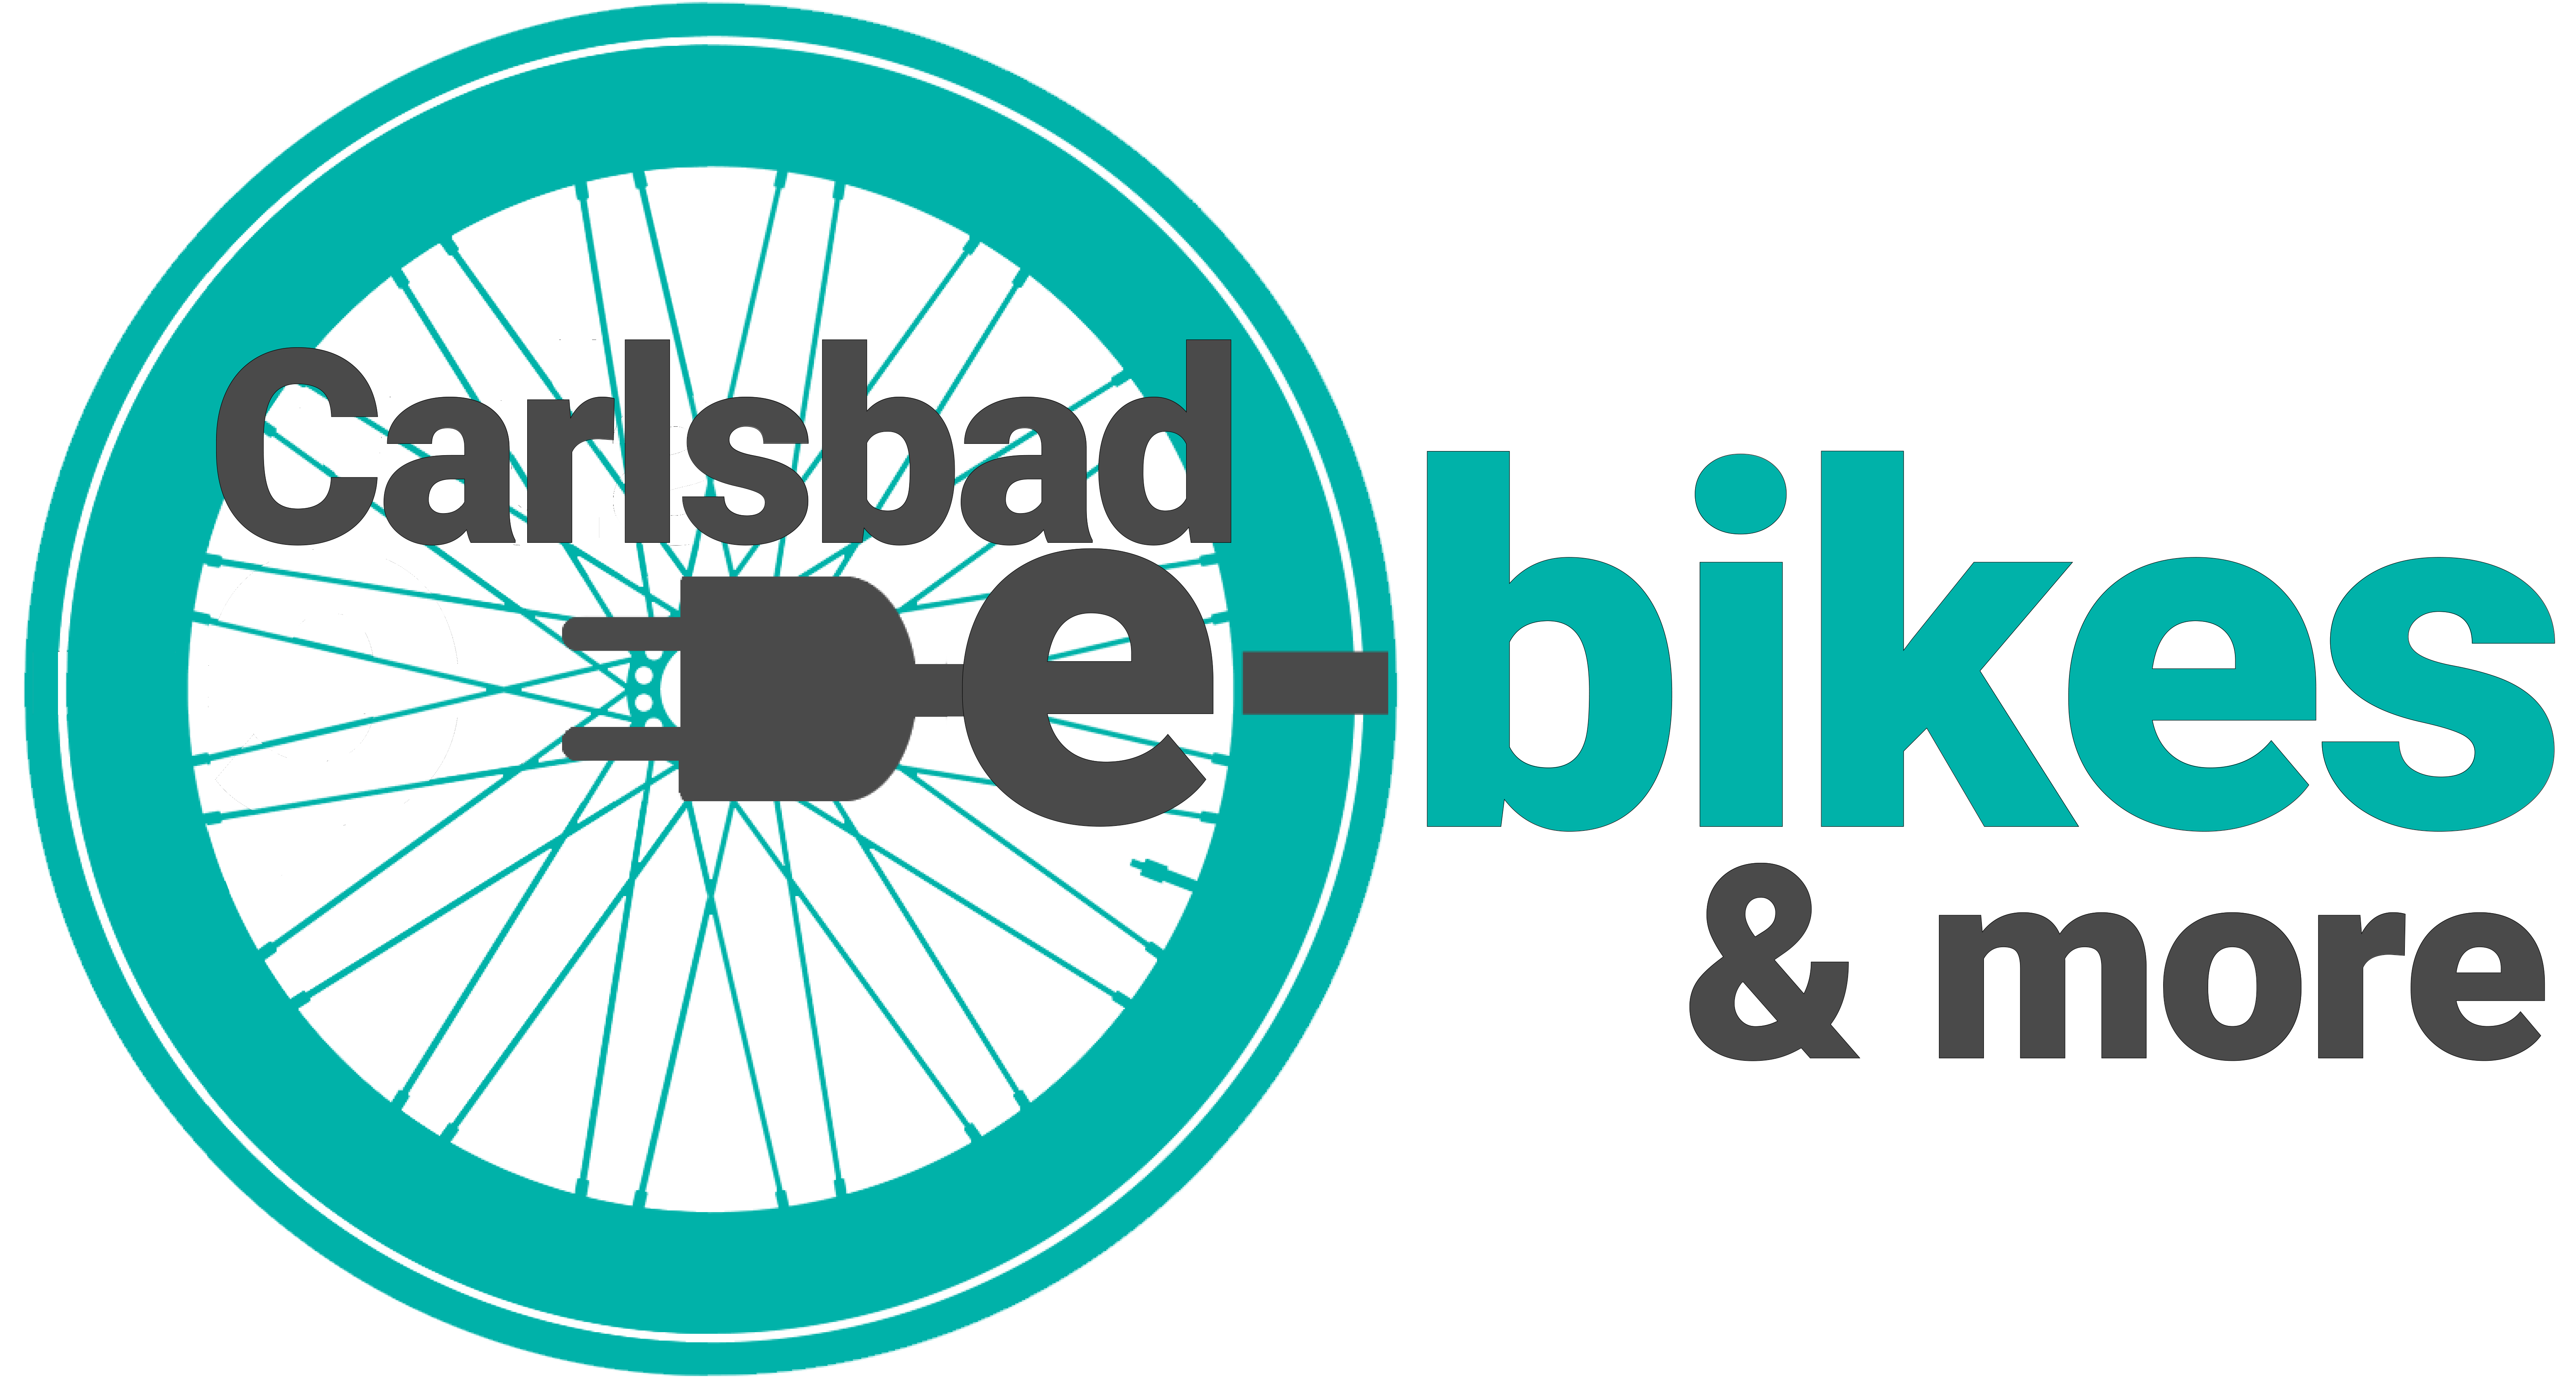 Carlsbad E-Bikes & More logo